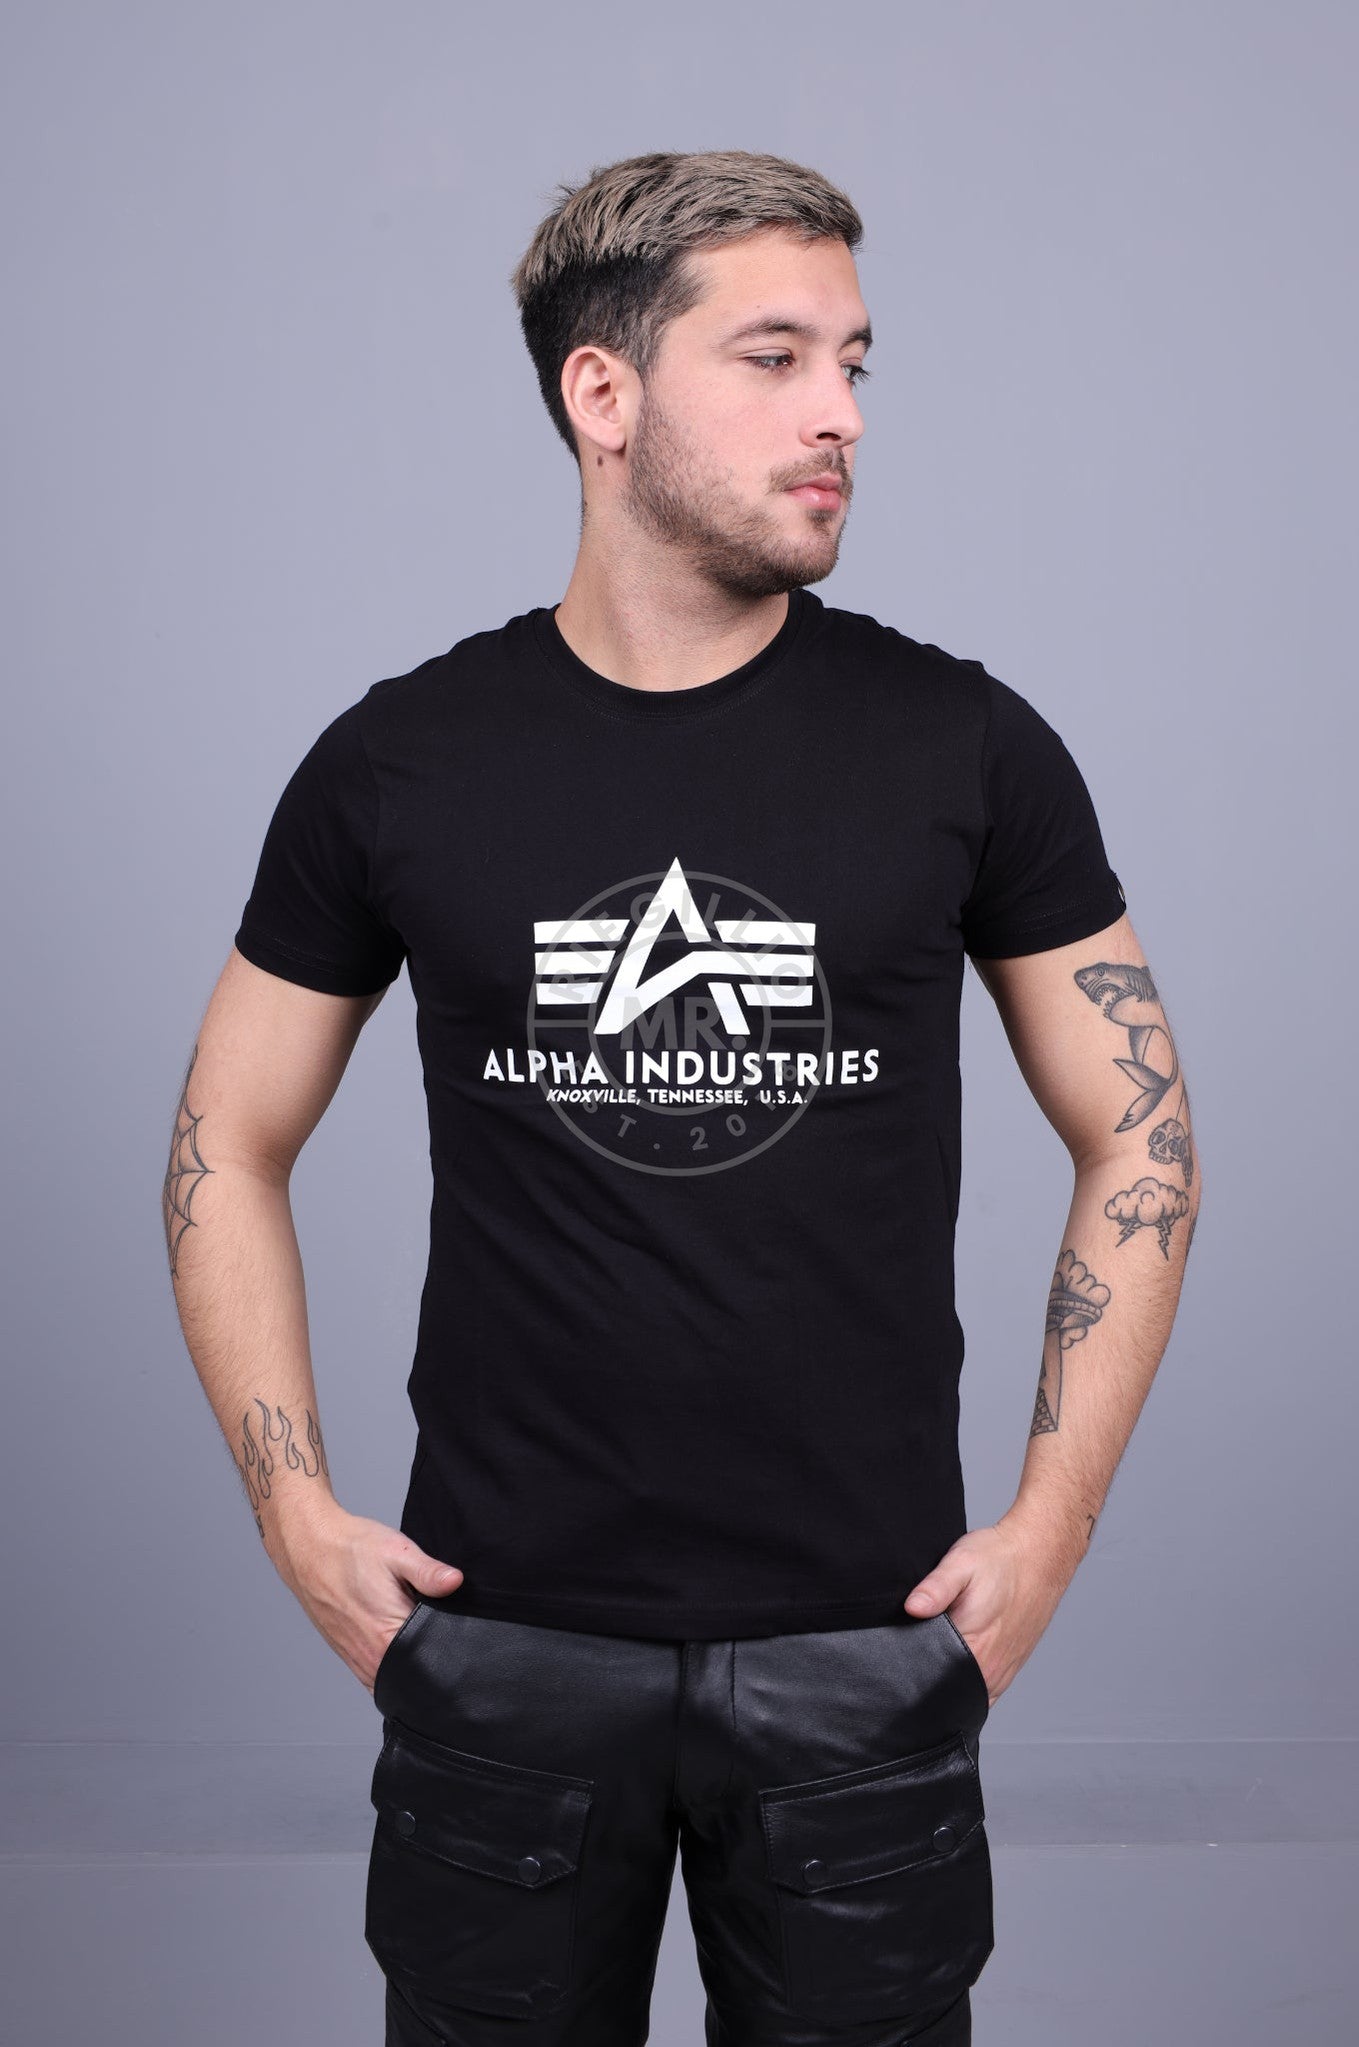 Alpha Industries Basic T-Shirt Black at MR. Riegillio